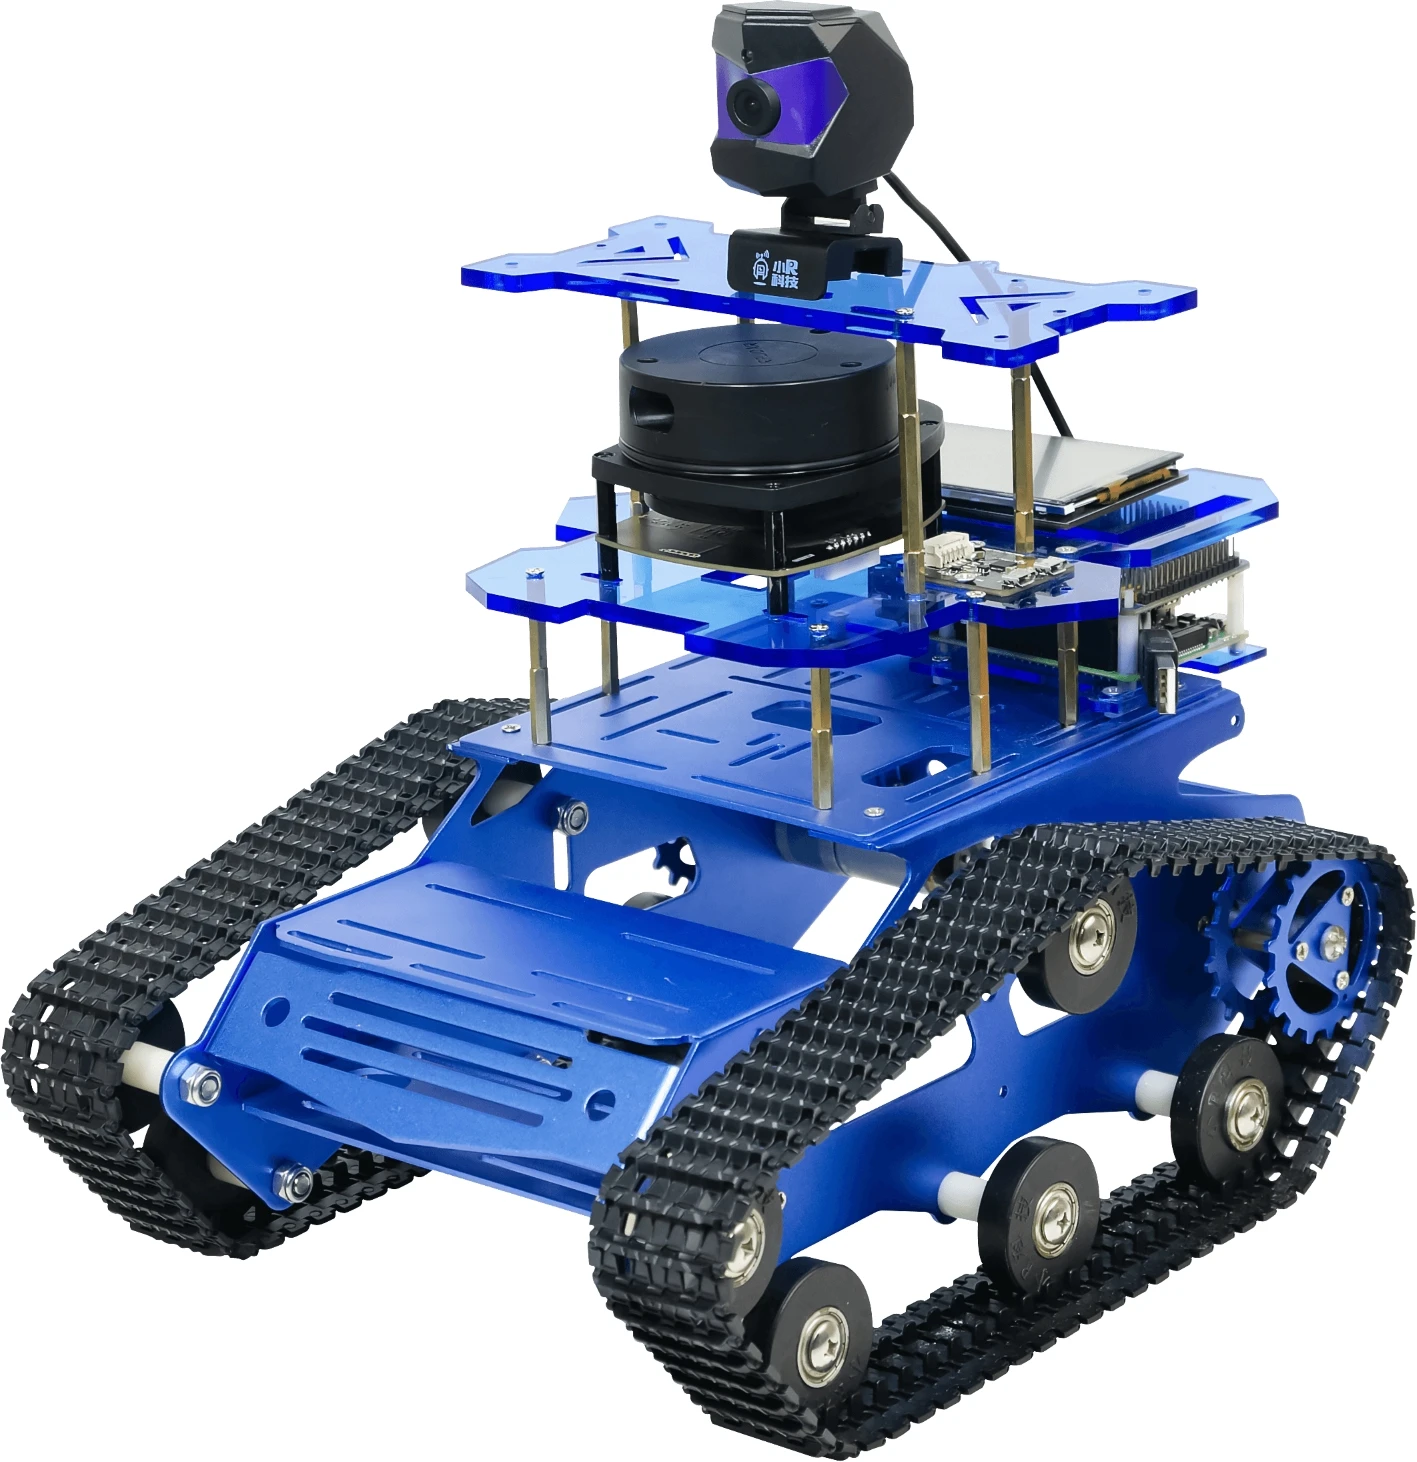 XiaoR Geek Ros Robot AI Smart Robot Car with Laser Radar for Raspberry Pi accessories ROS S1 lidar AI navigation robot kits